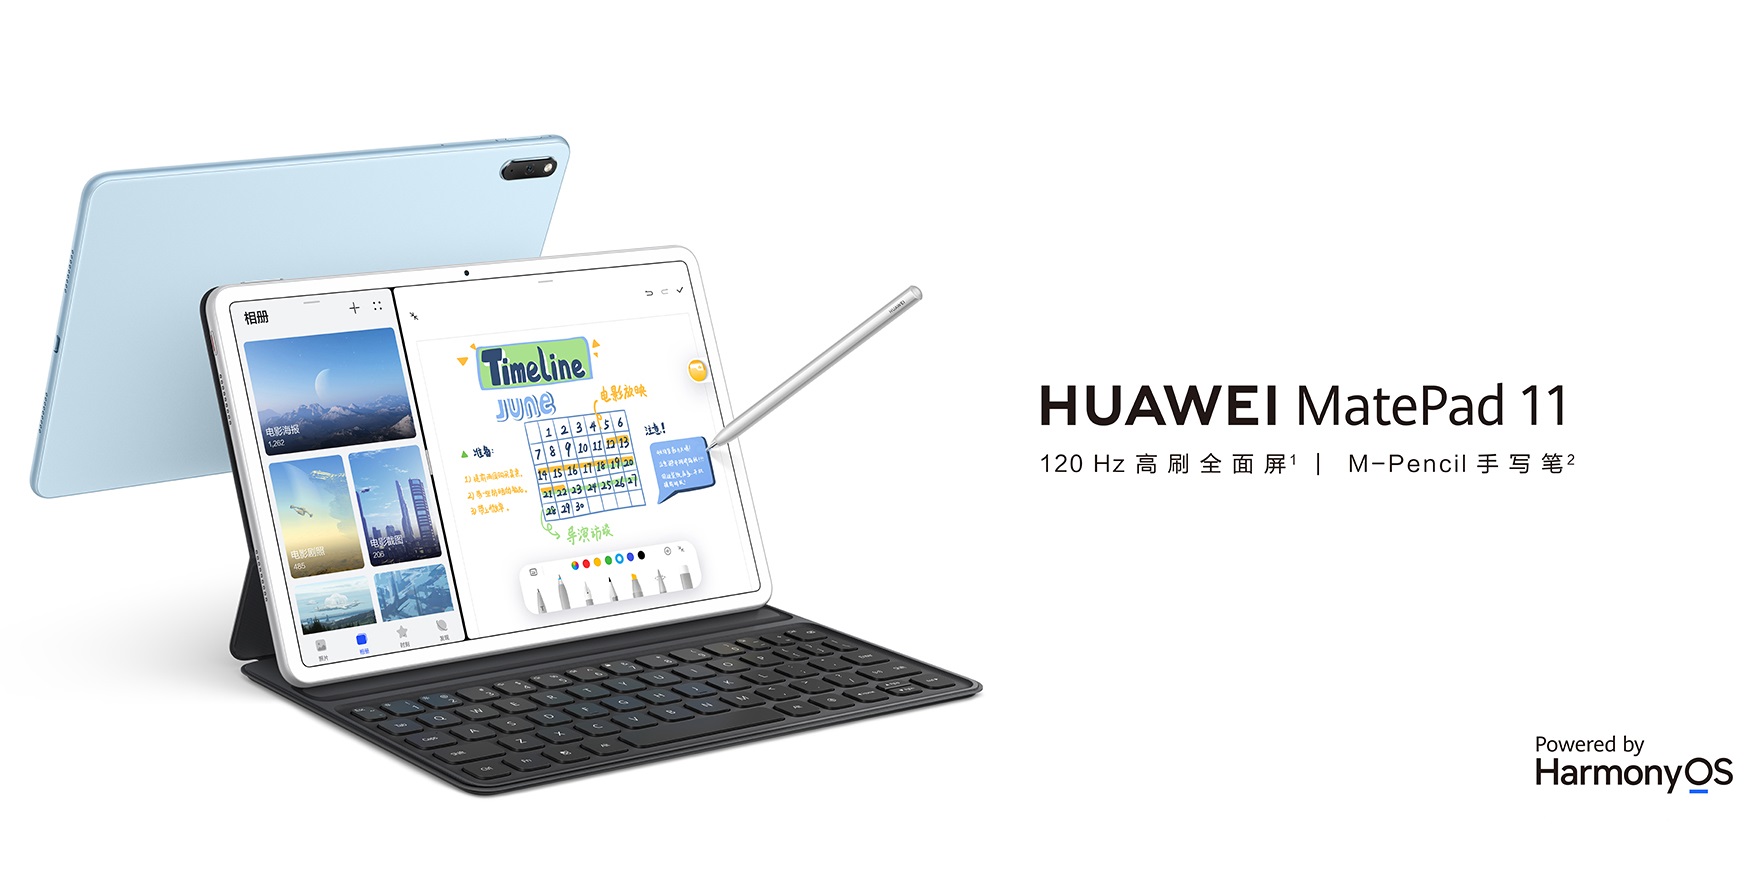 Huawei MatePad 11 featured